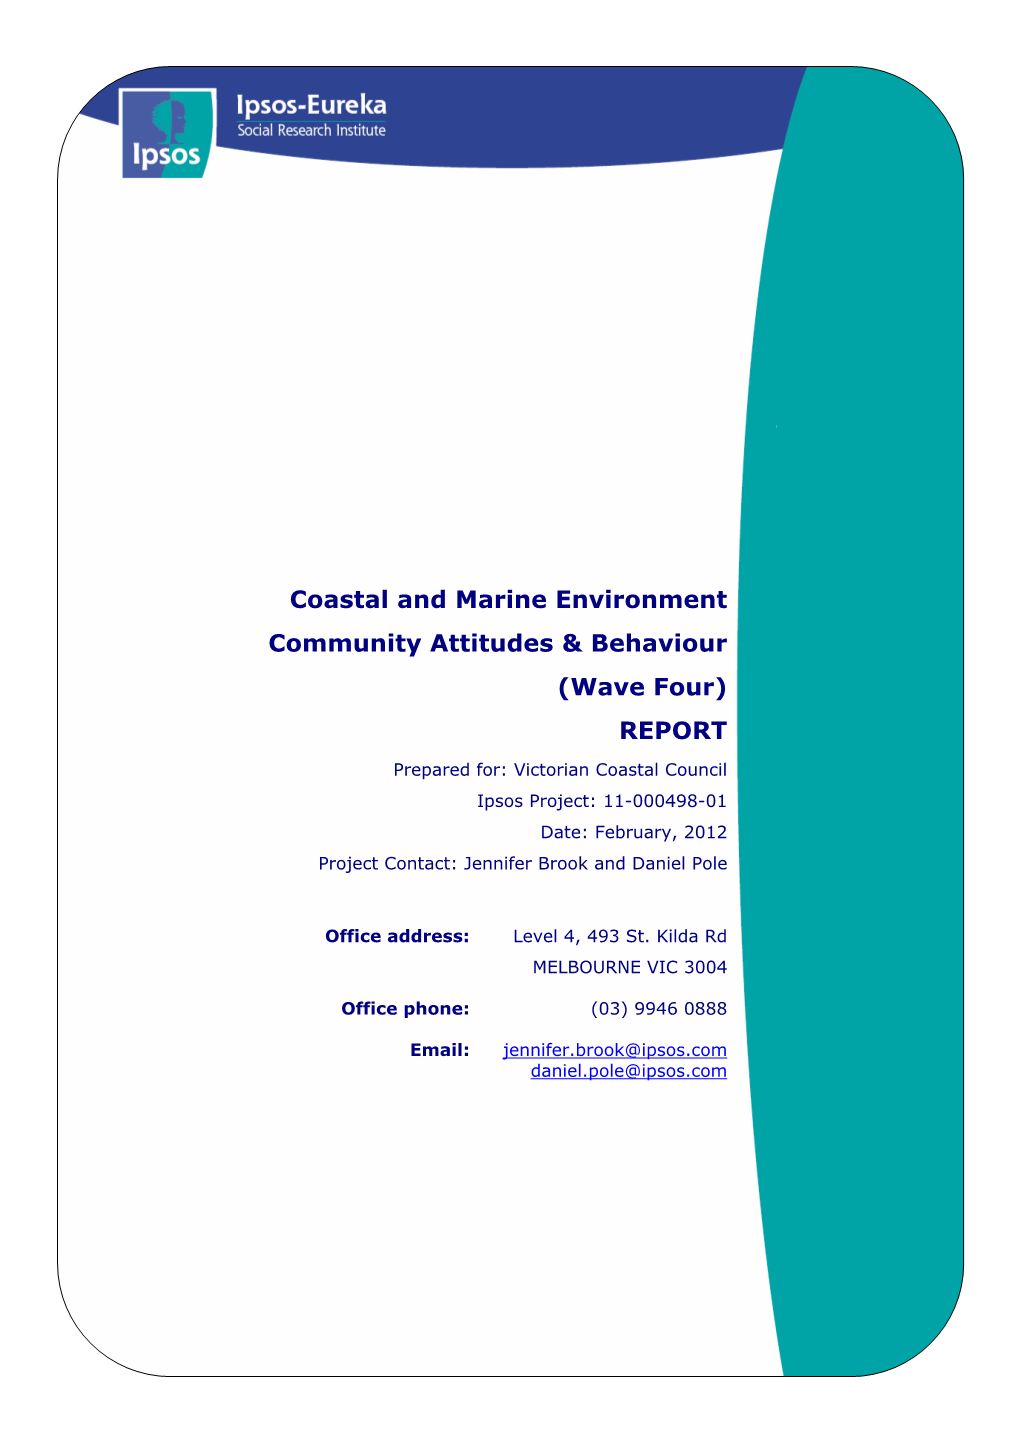 Coastal and Marine Environment Community Attitudes & Behaviour